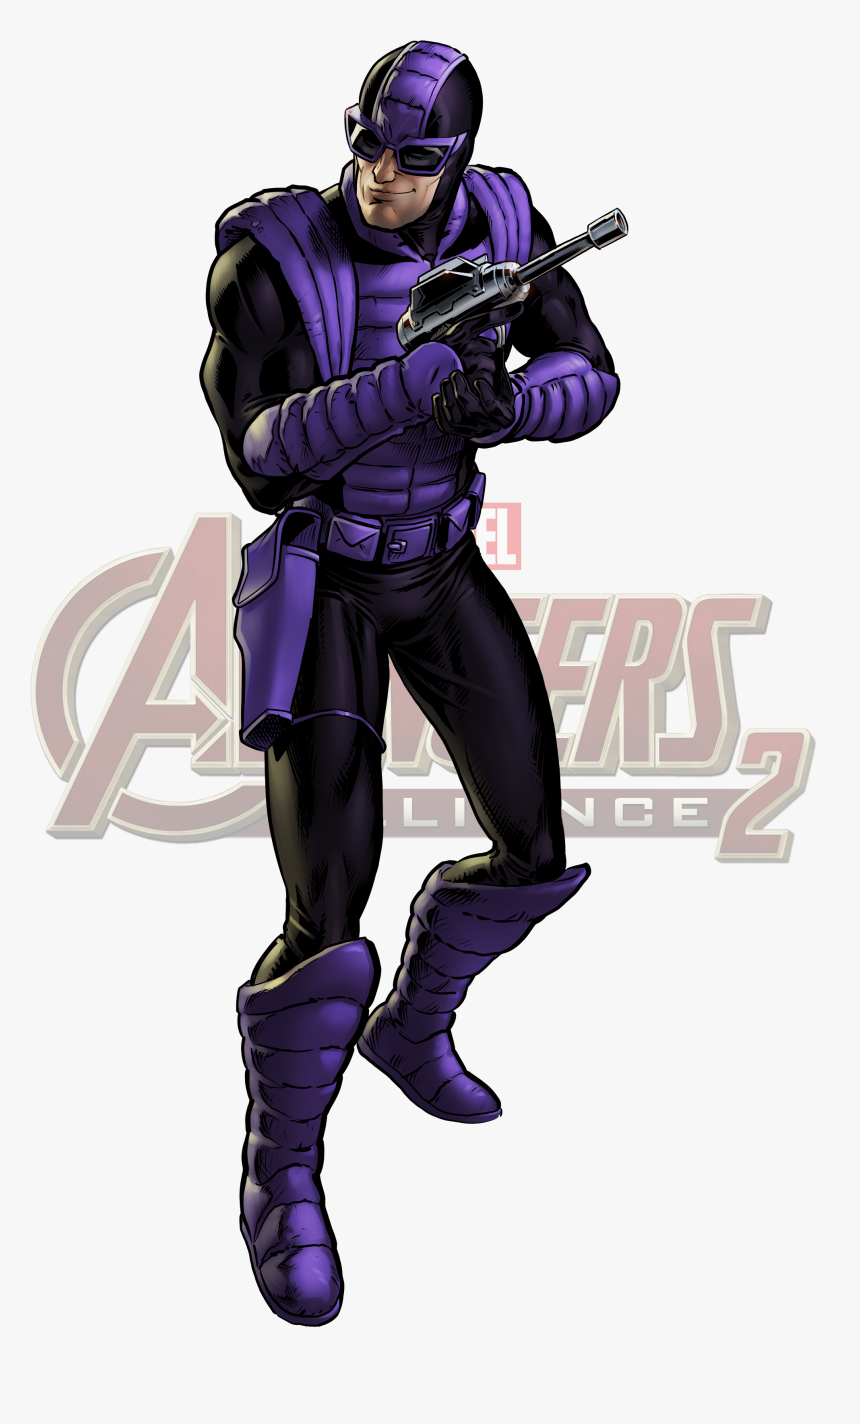 Marvel Avengers Alliance 2 Villains, HD Png Download, Free Download